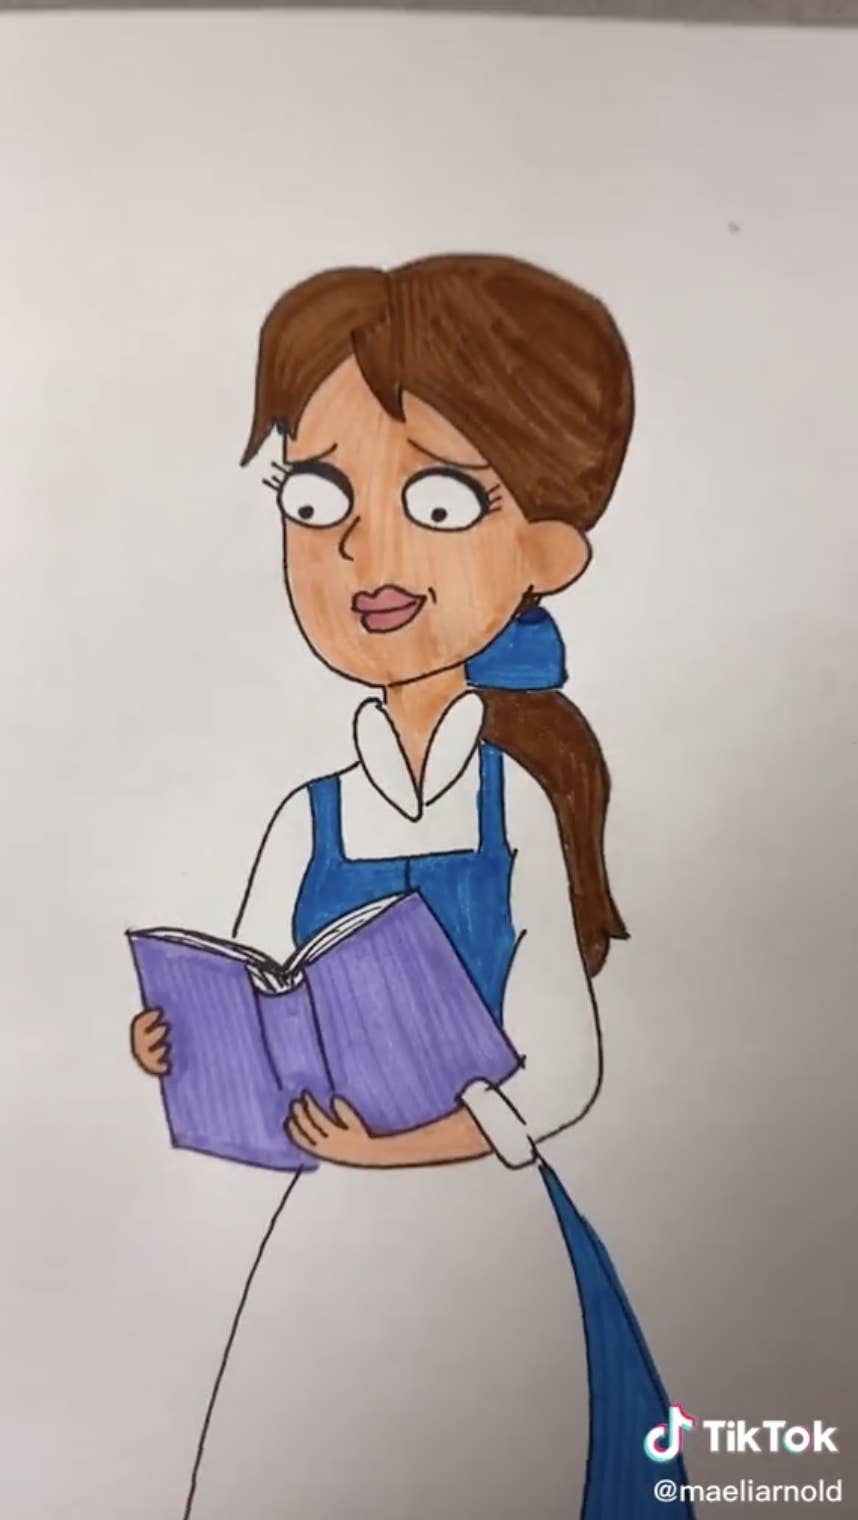 This Woman Draws Disney Princesses As Cartoon Characters